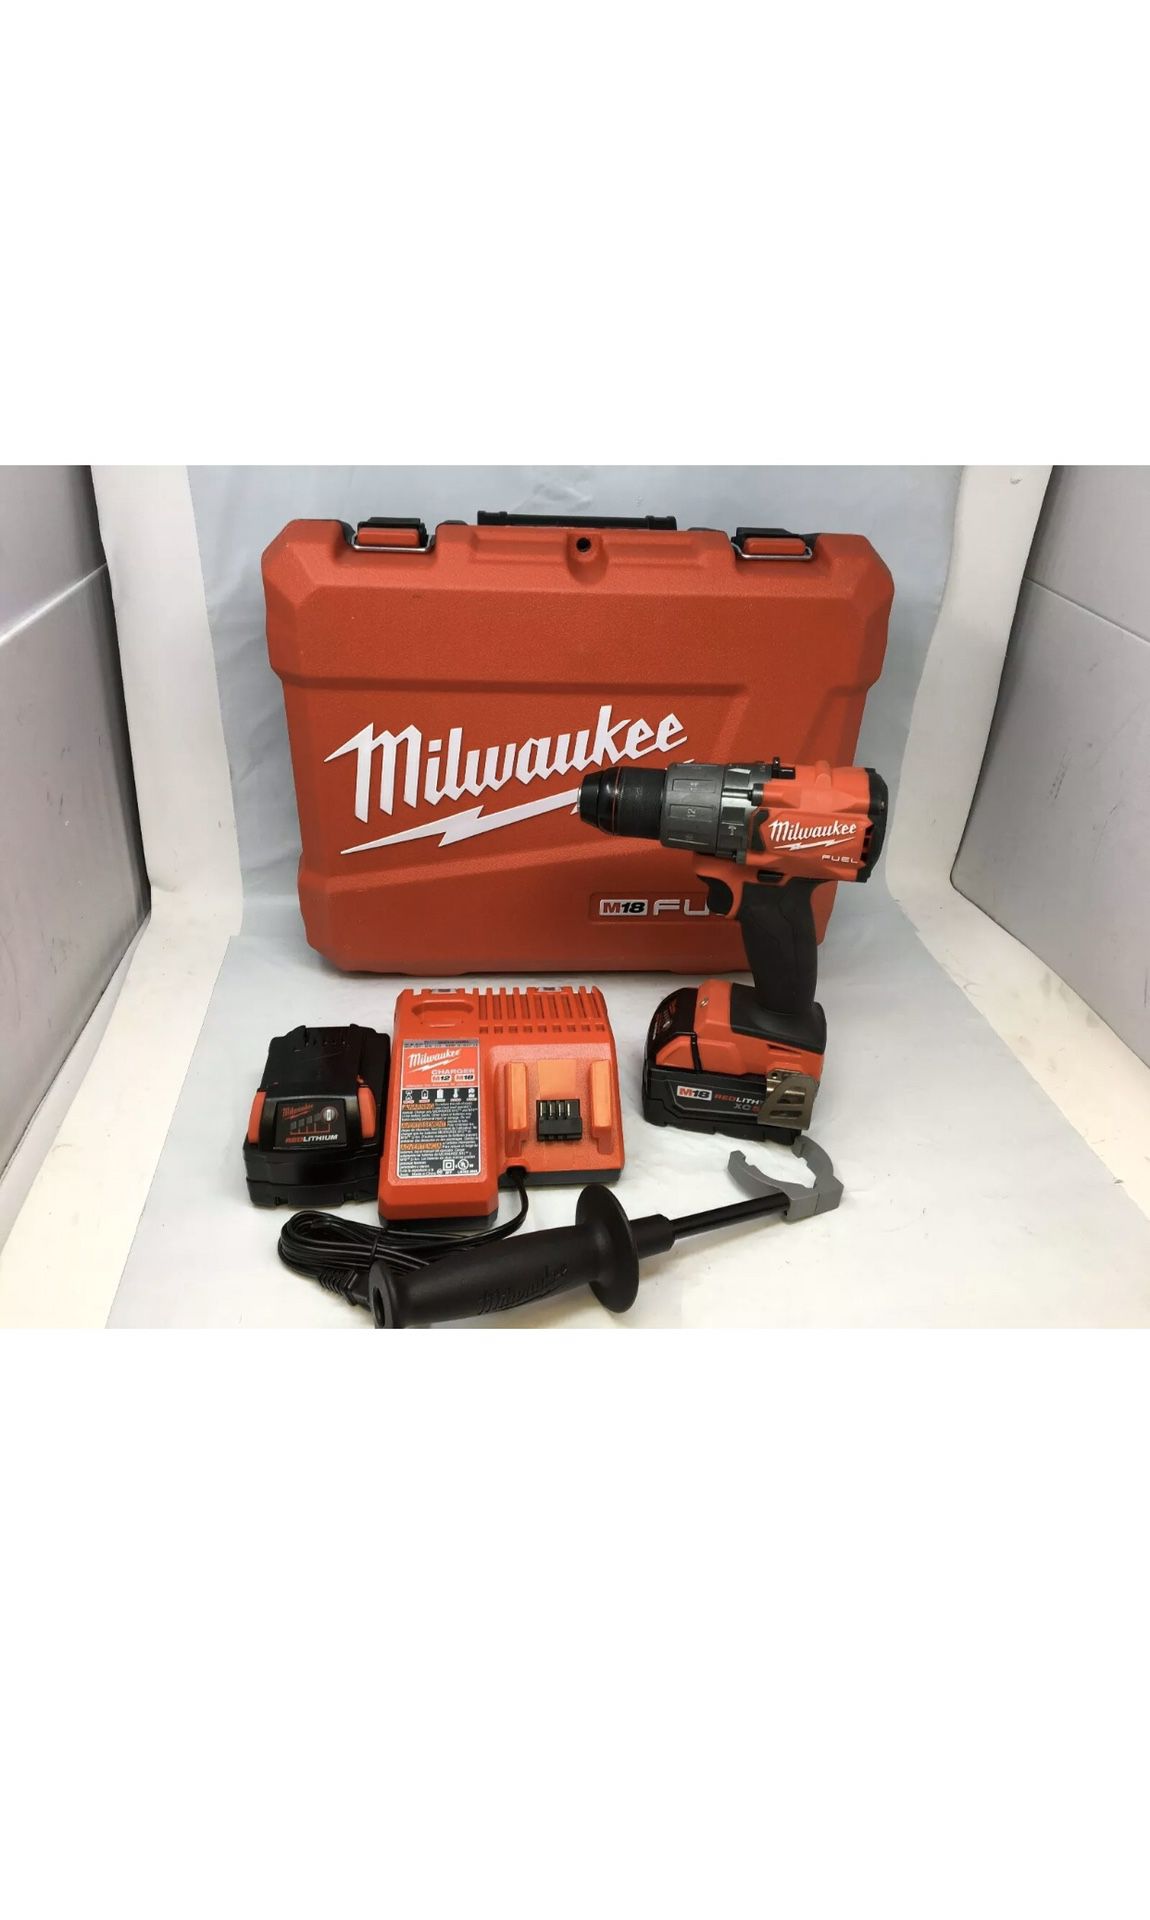 Milwaukee m18 Fuel hammer drill kit 2804-22